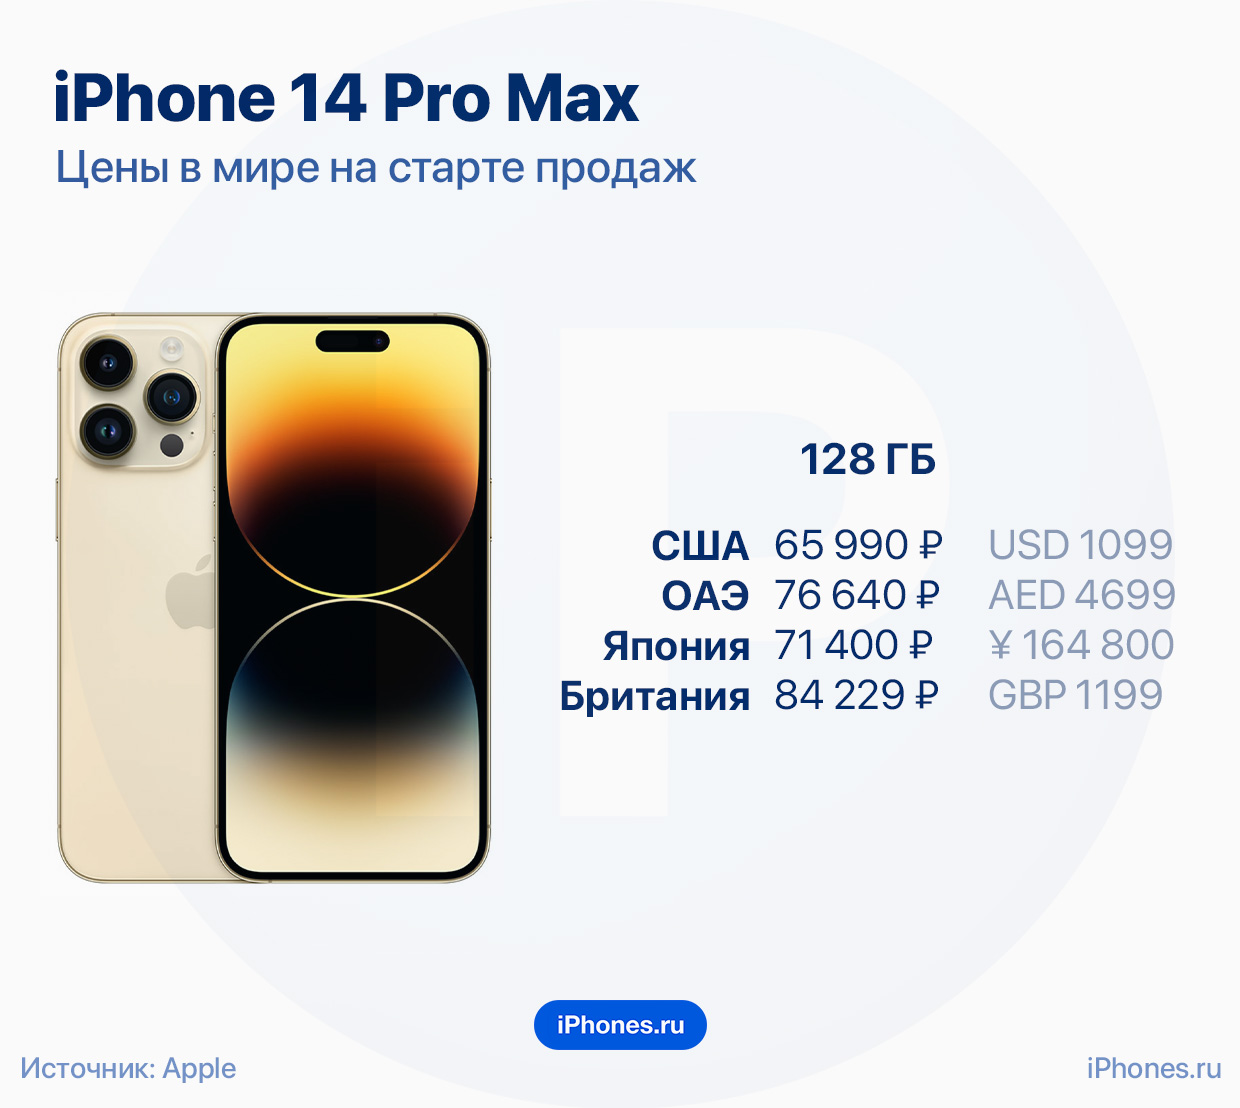 Iphone 14 цены 128gb. Айфон 14 Промакс. Ширина iphone 11 Pro Max. Iphone 14 Pro Max 2022. Iphone 14 Pro Pro Max.